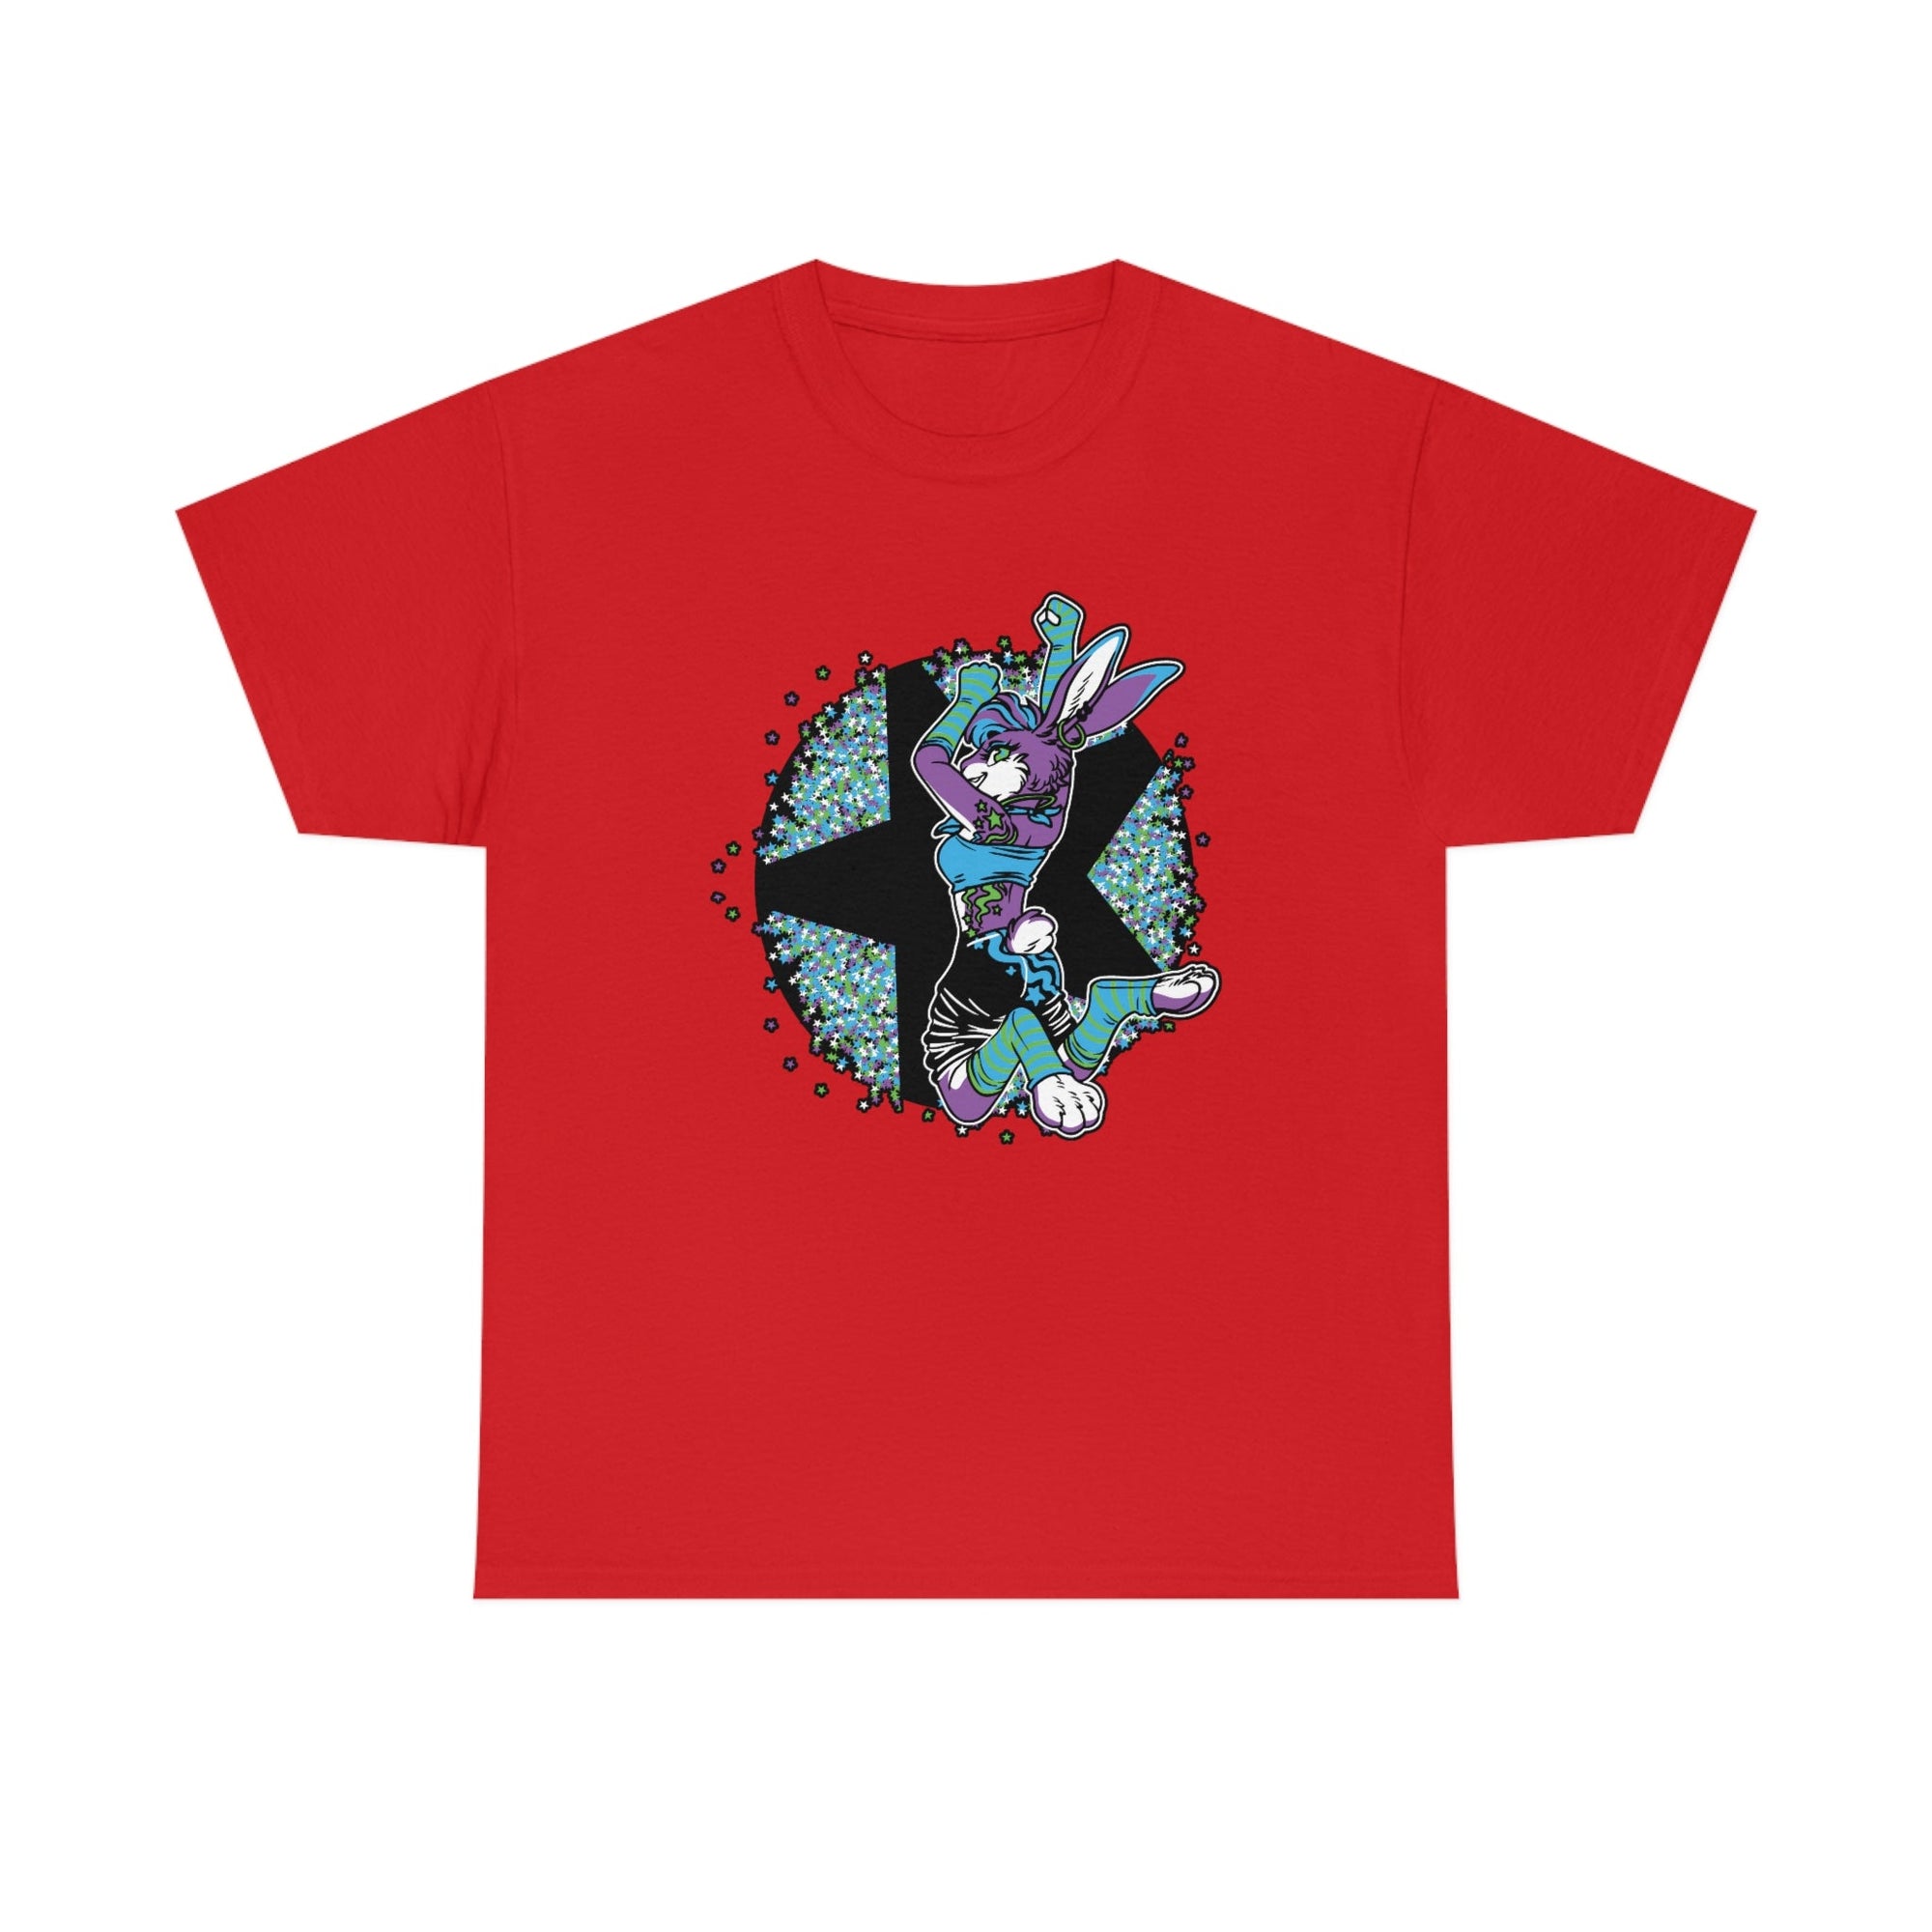 Rave Rabbit - T-Shirt T-Shirt Artworktee Red S 